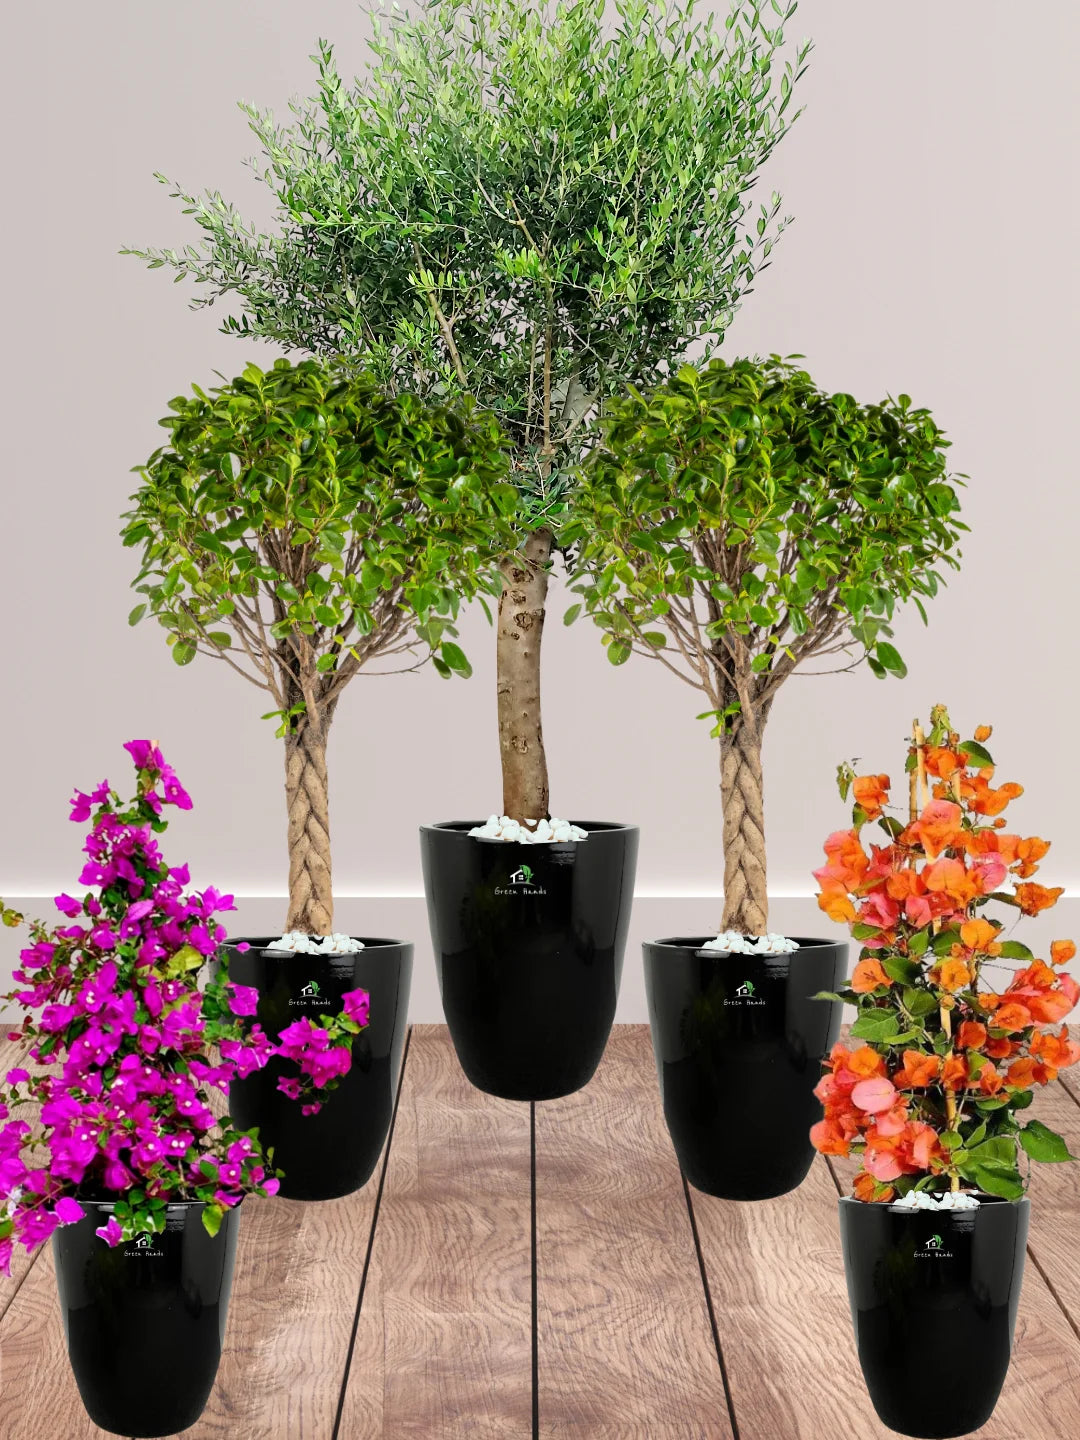 Premium Outdoor Patio Plant Bundle: 5 Potted Plants for Dubai & Abu Dhabi Homes/Offices